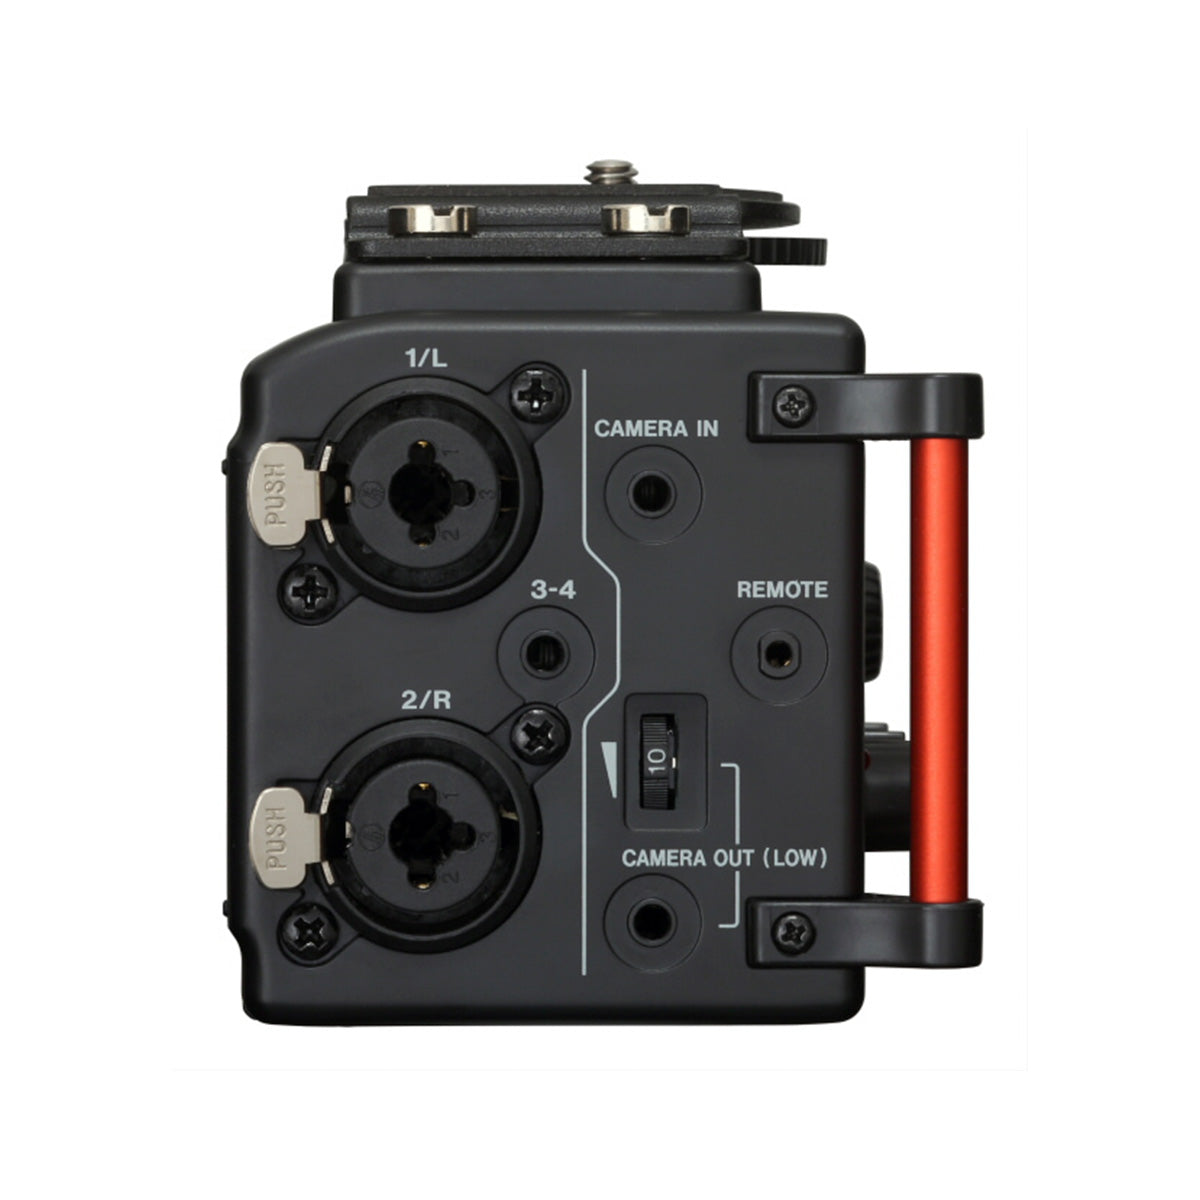 TASCAM(タスカム) カメラ用リニアPCMレコーダー/ミキサー DR-60DMKII